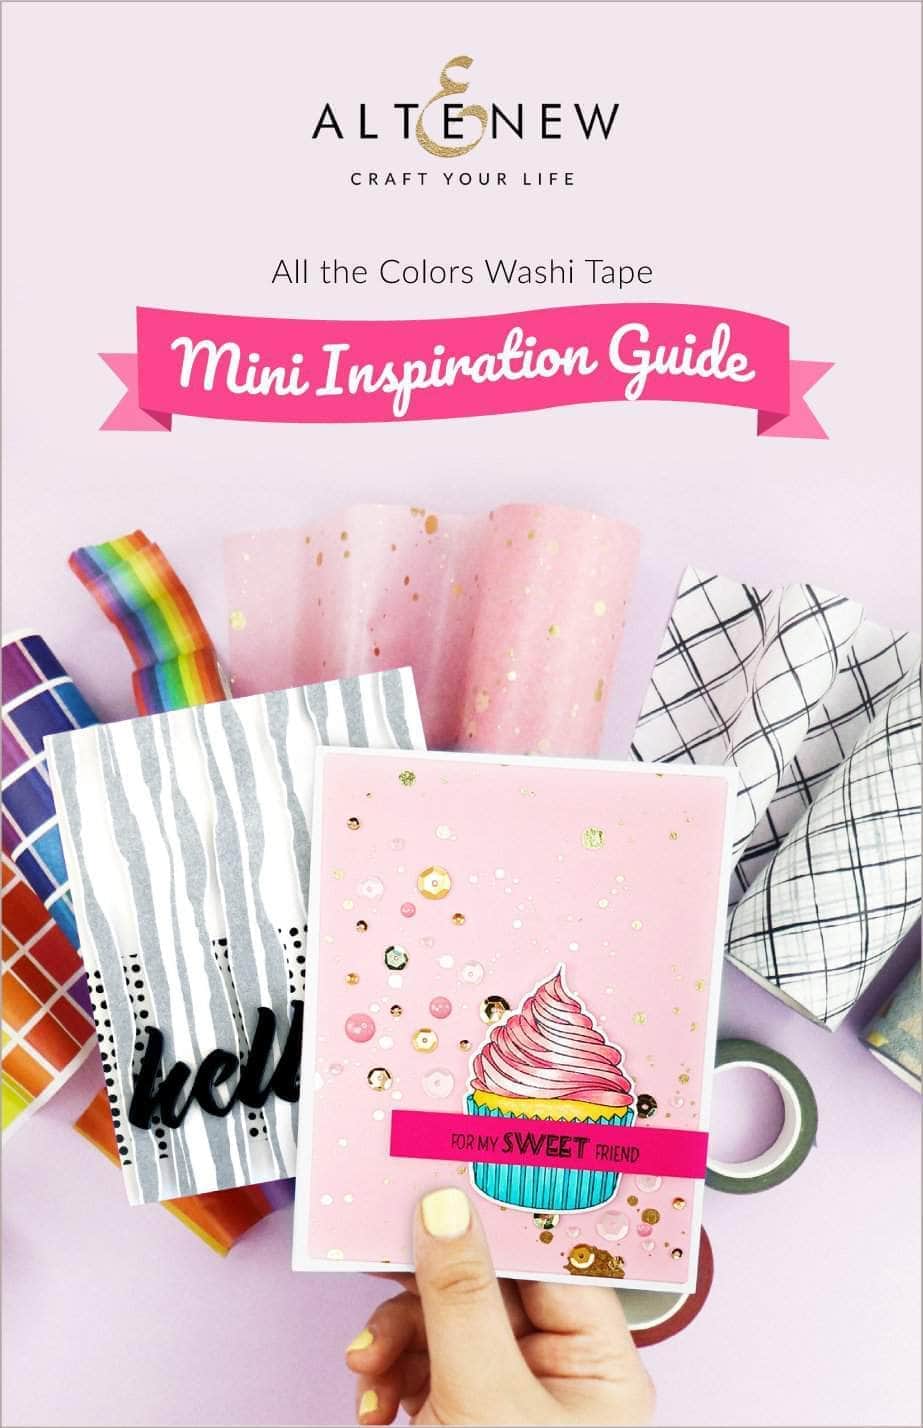 Printed Media All the Colors Washi Tape Mini Inspiration Guide